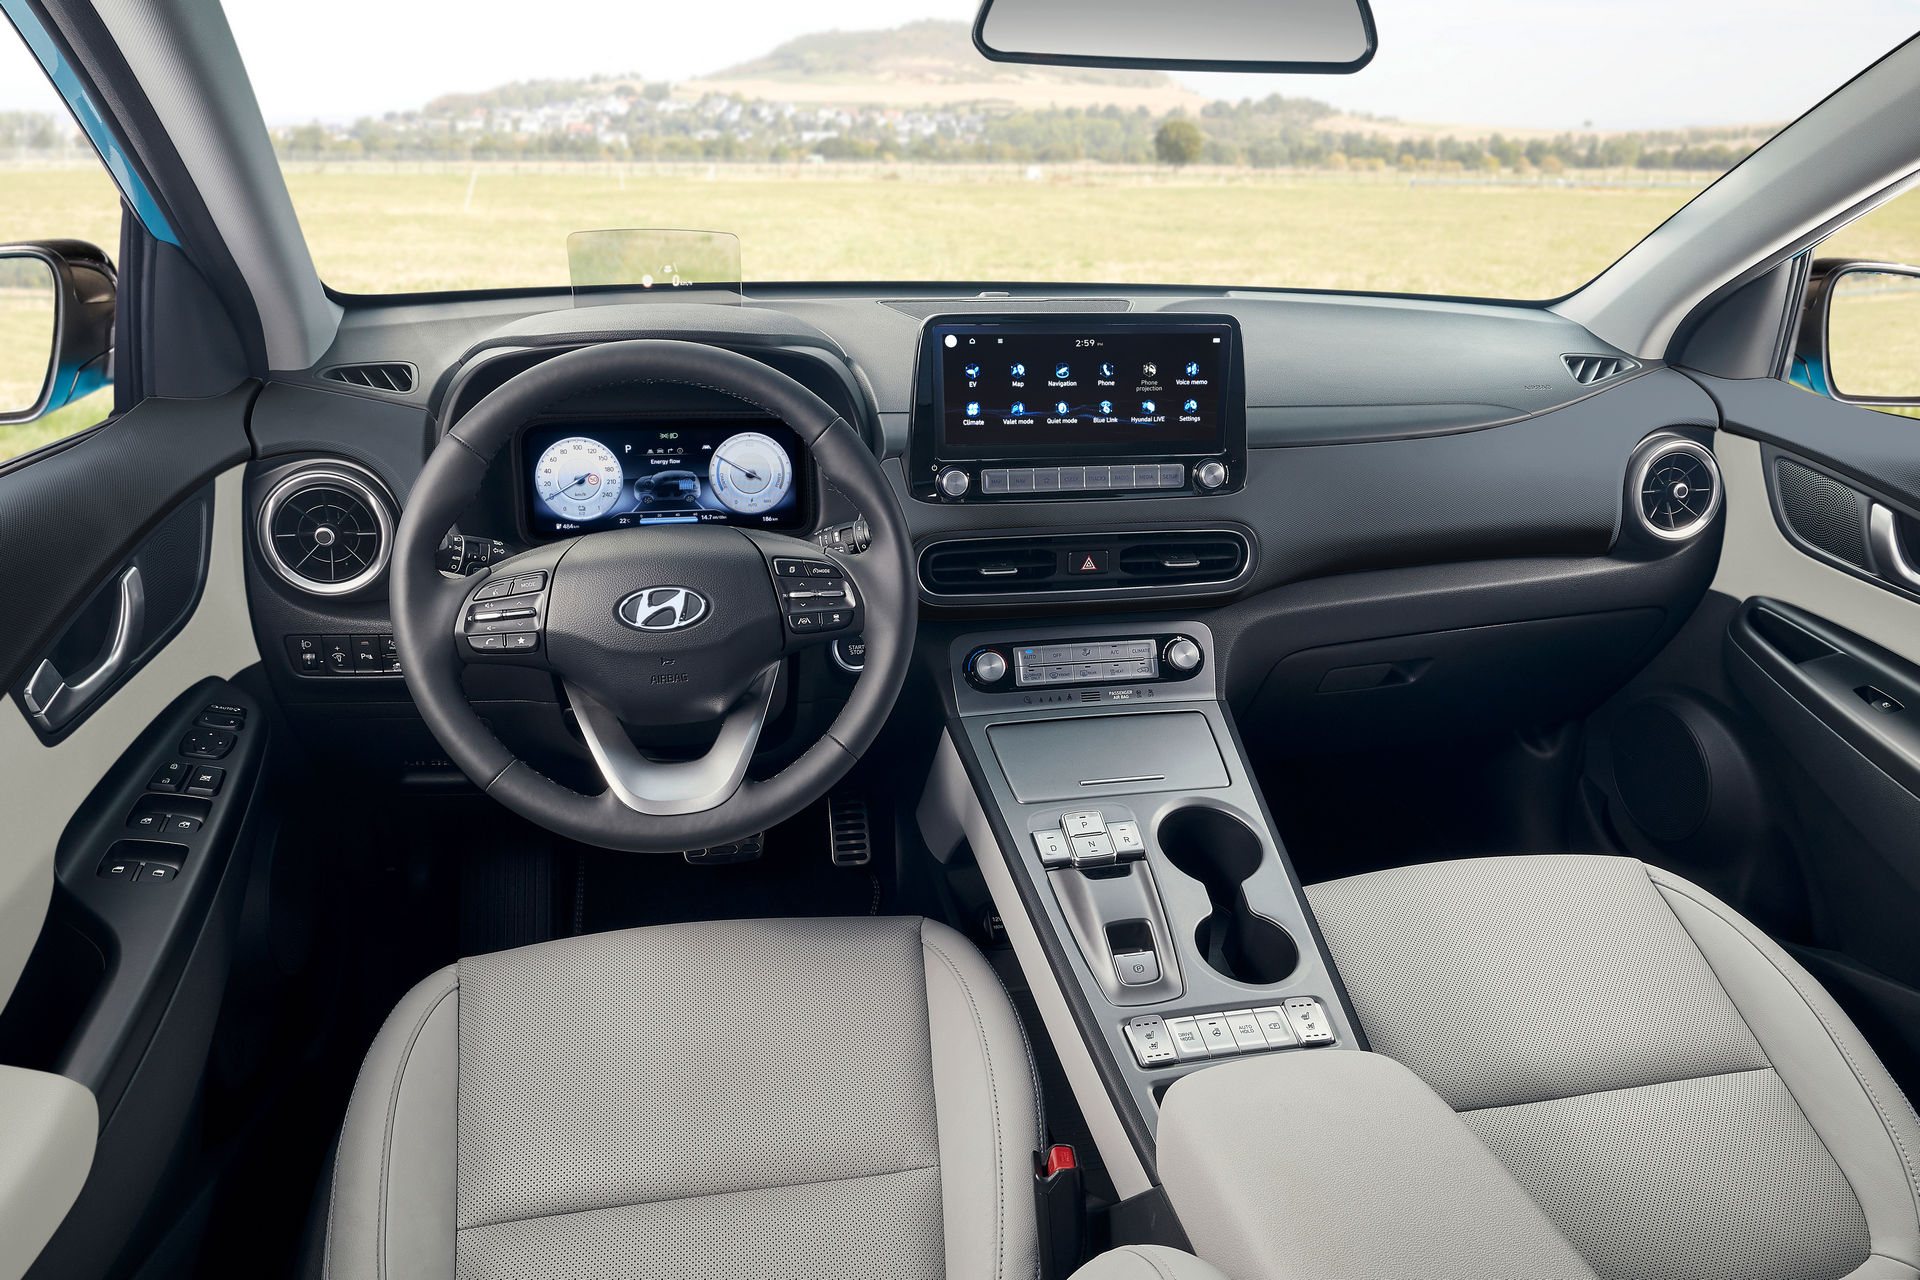 2021 Hyundai Kona Review Pricing and Specs